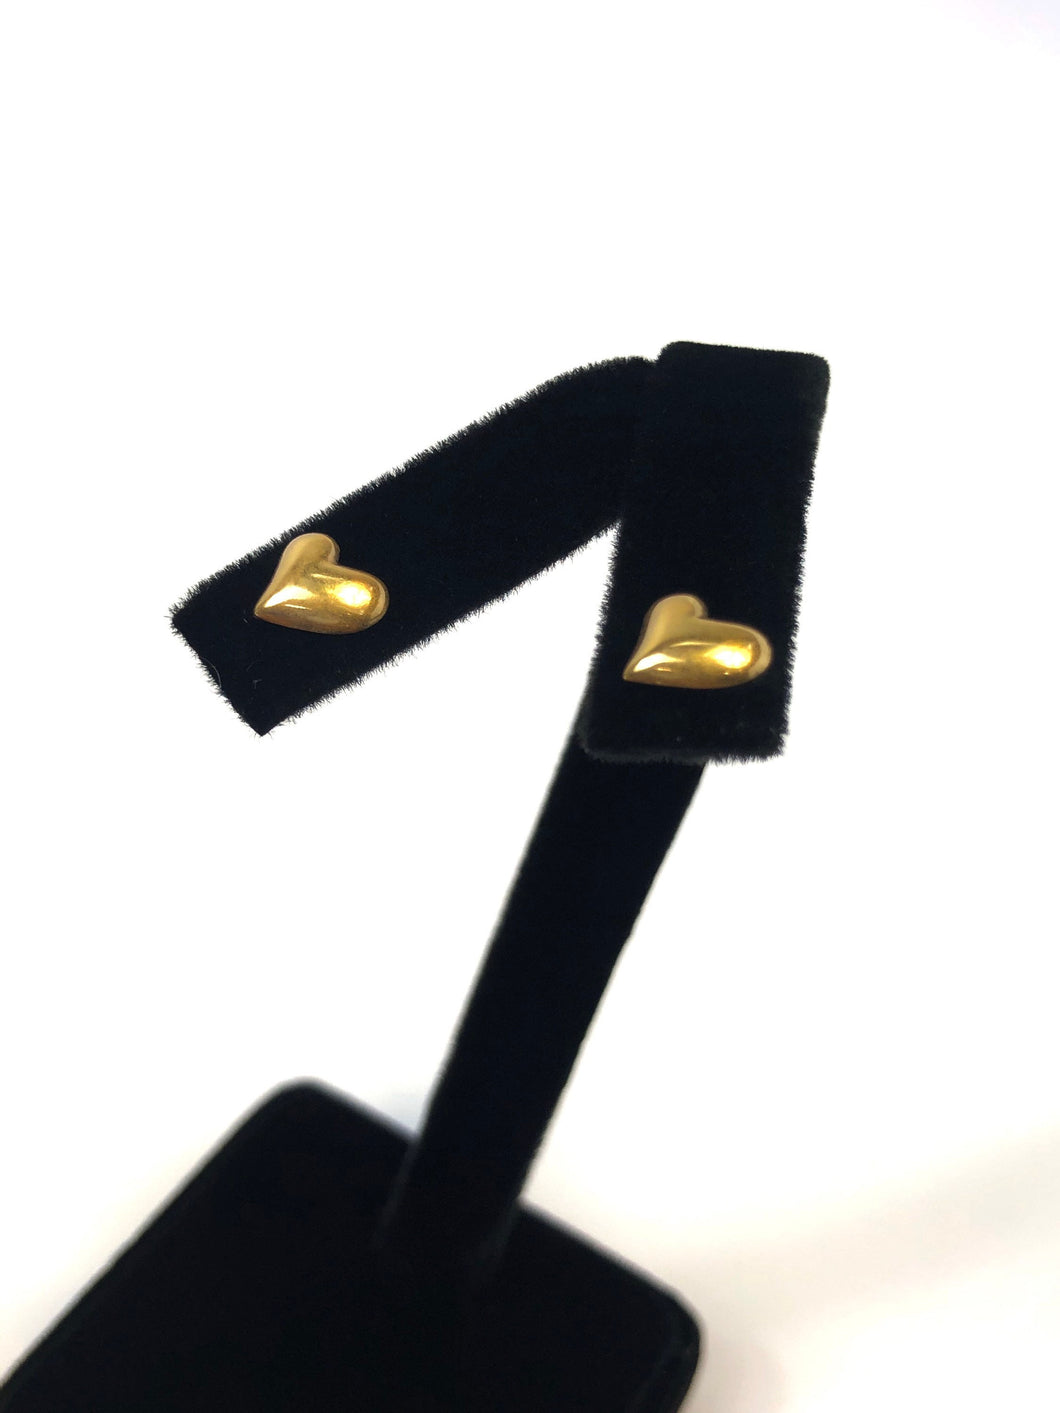 Beautiful Round Heart Shaped Stud Earrings (14KGF) 1.18mm X 8.5mm, sku# E53-4